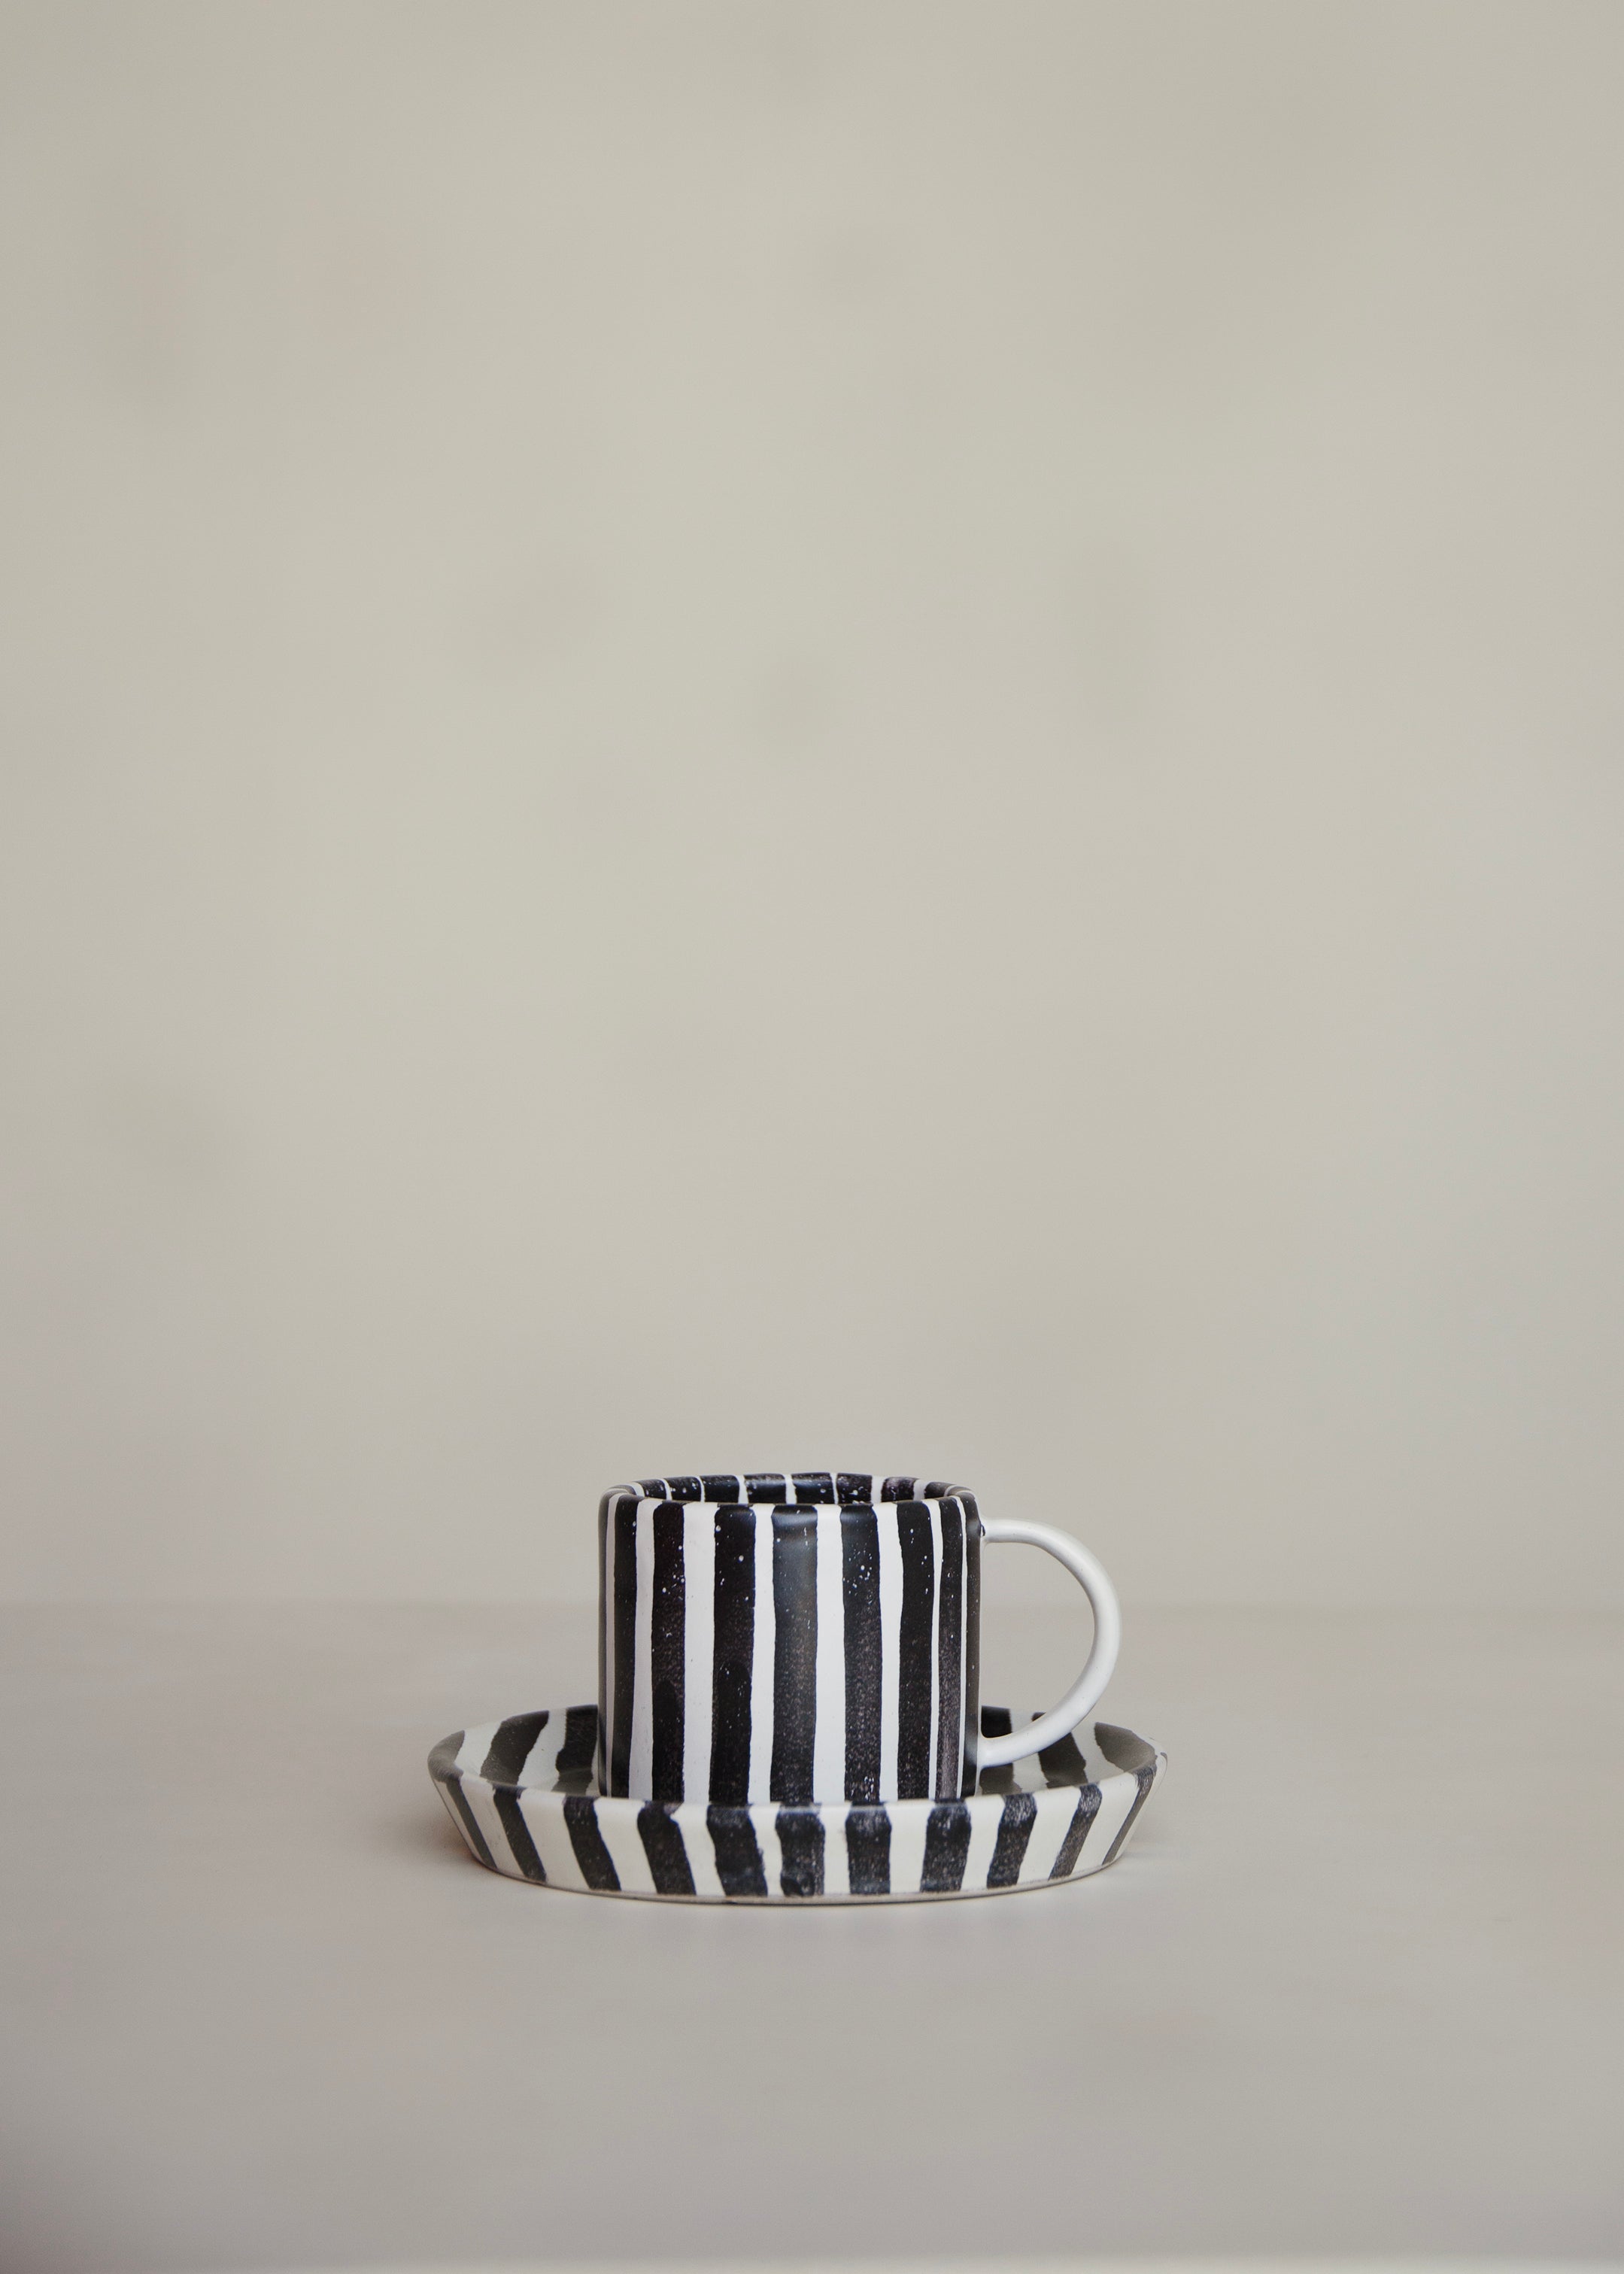 Agni Cup / Striped